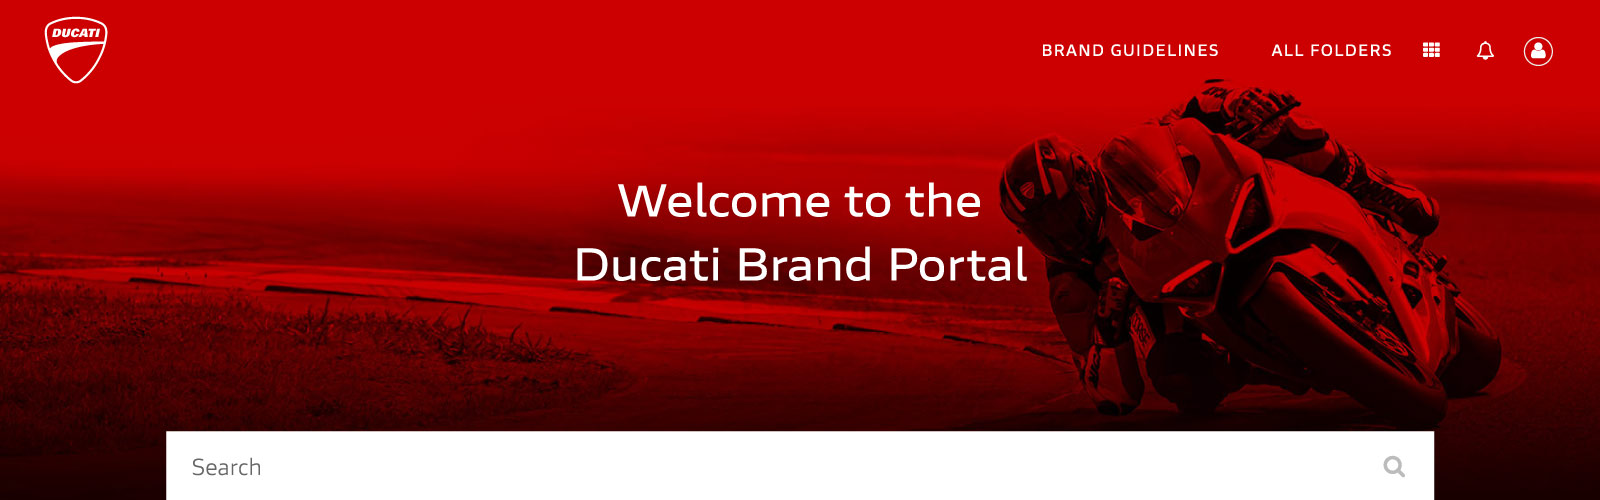 Ducati Brand Portal Homepage Hero